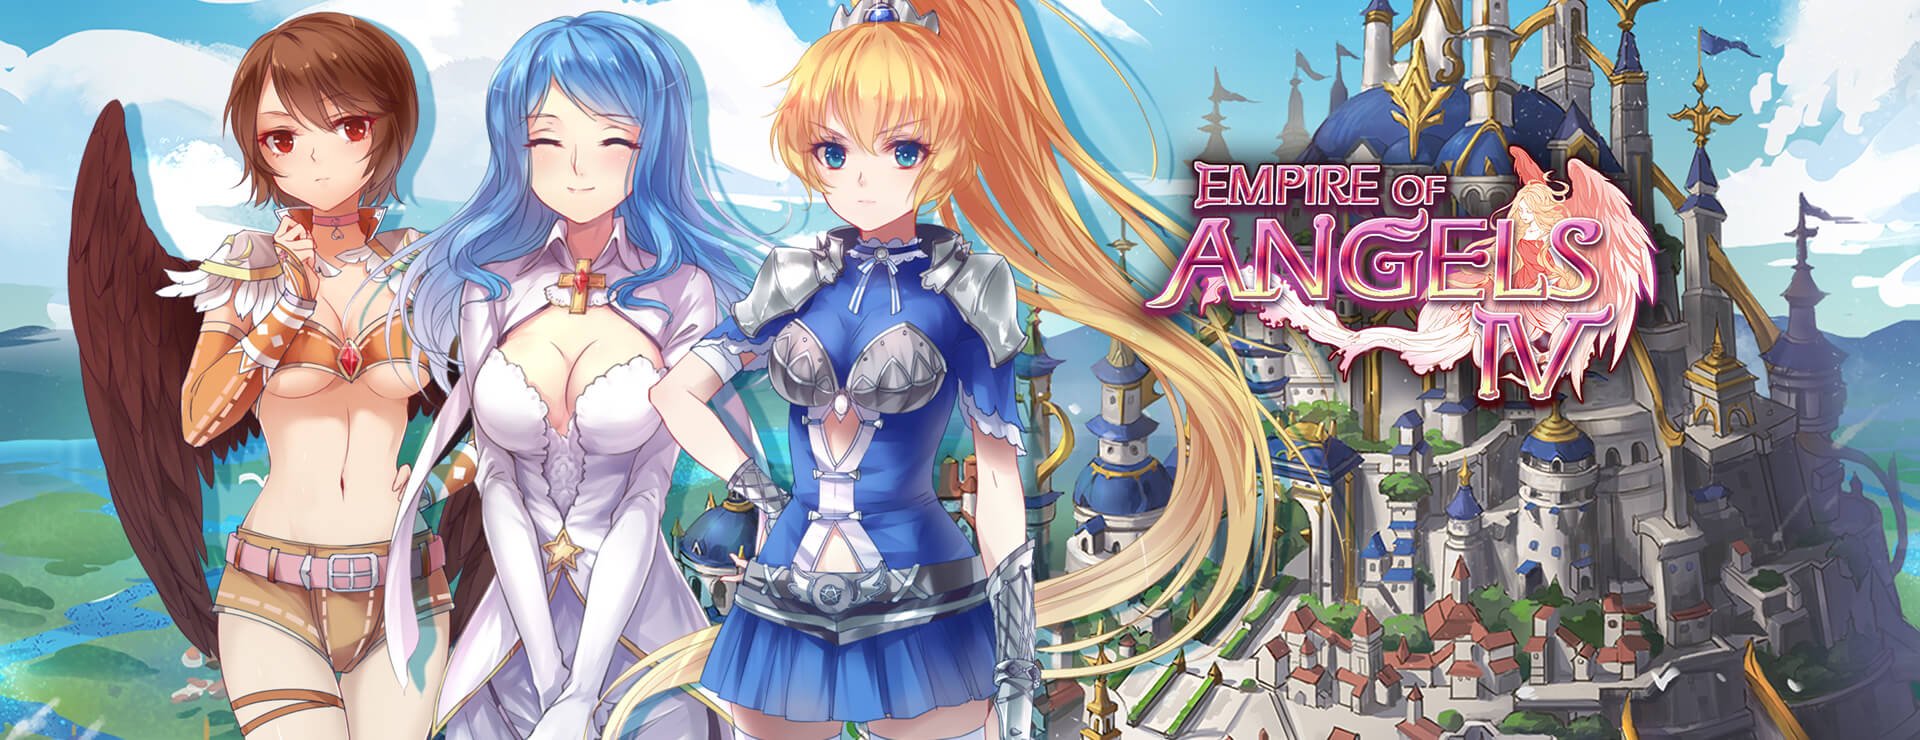 Empire of Angels IV - アクションアドベンチャー ゲーム